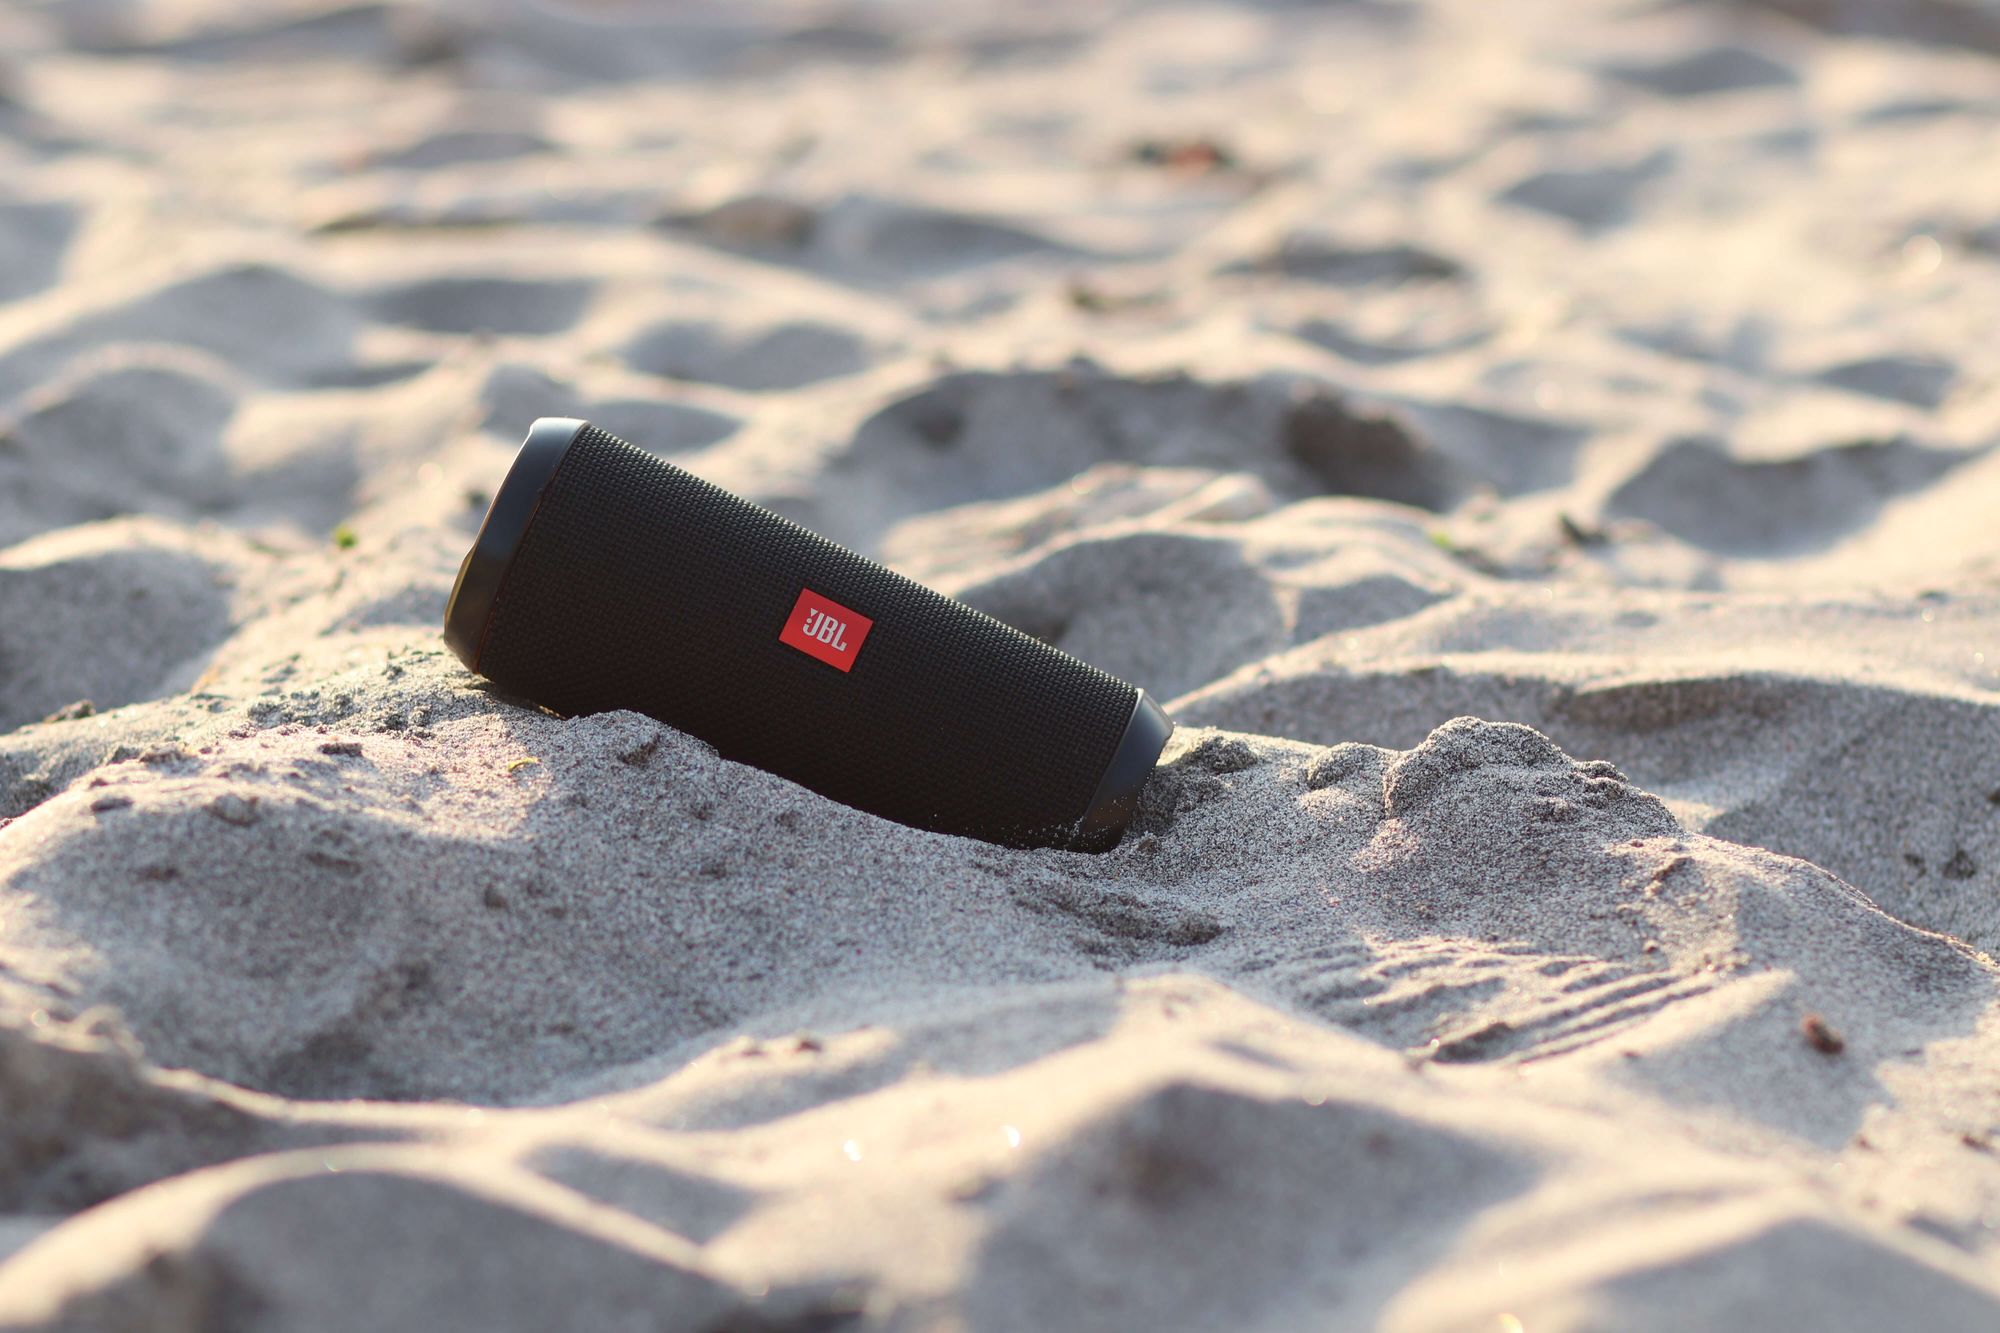 A portable speaker on sandy ground.